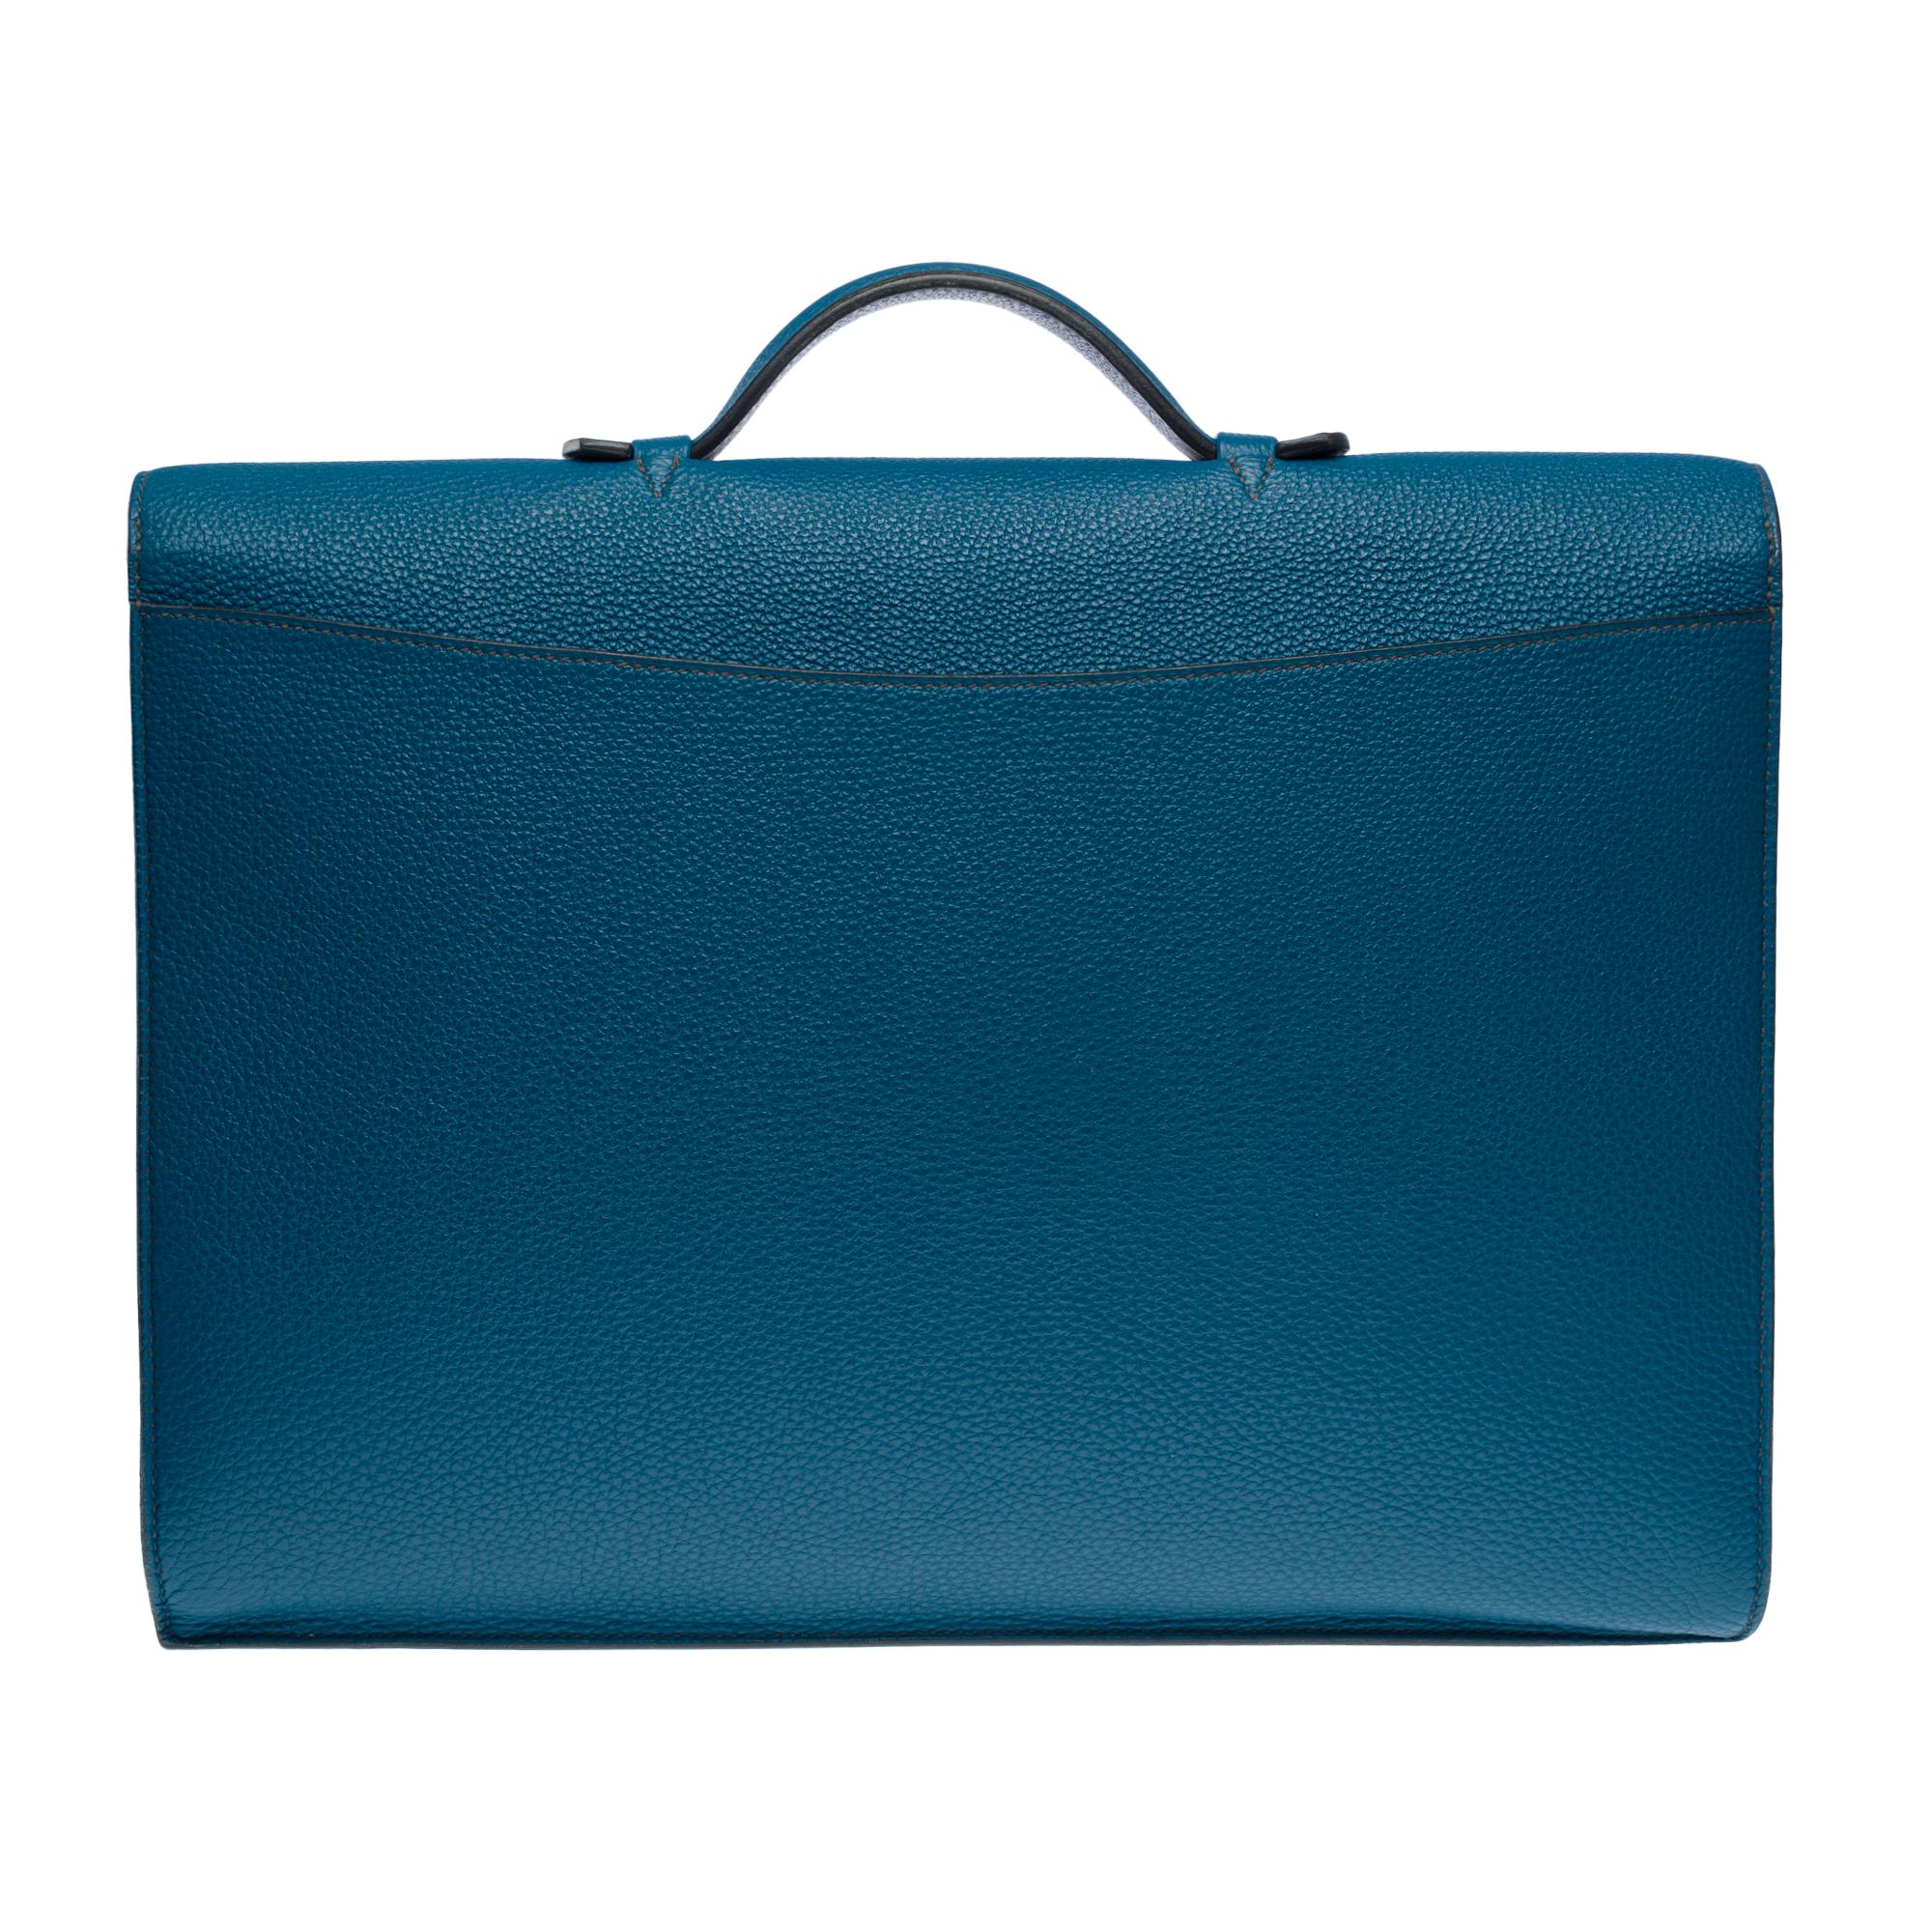 Men's Beautiful & Chic Hermès Sac à dépêches briefcase in Blue Togo leather, SHW